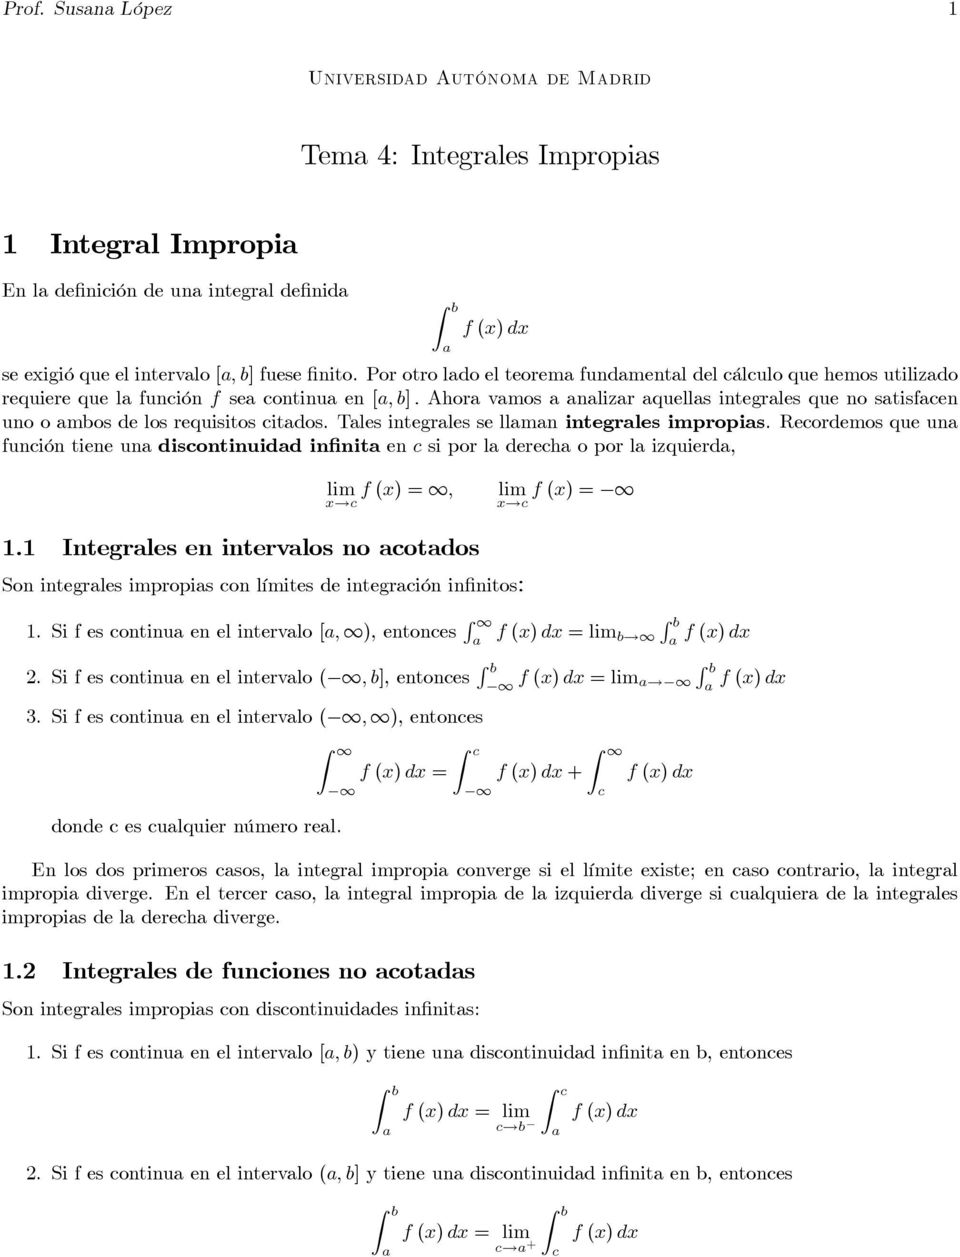 Tles integrles se llmn integrles impropis. Recordemos que un función tiene un discontinuidd infinit en c si por l derech o por l izquierd, lim f (x) =, lim x c f (x) = x c 1.